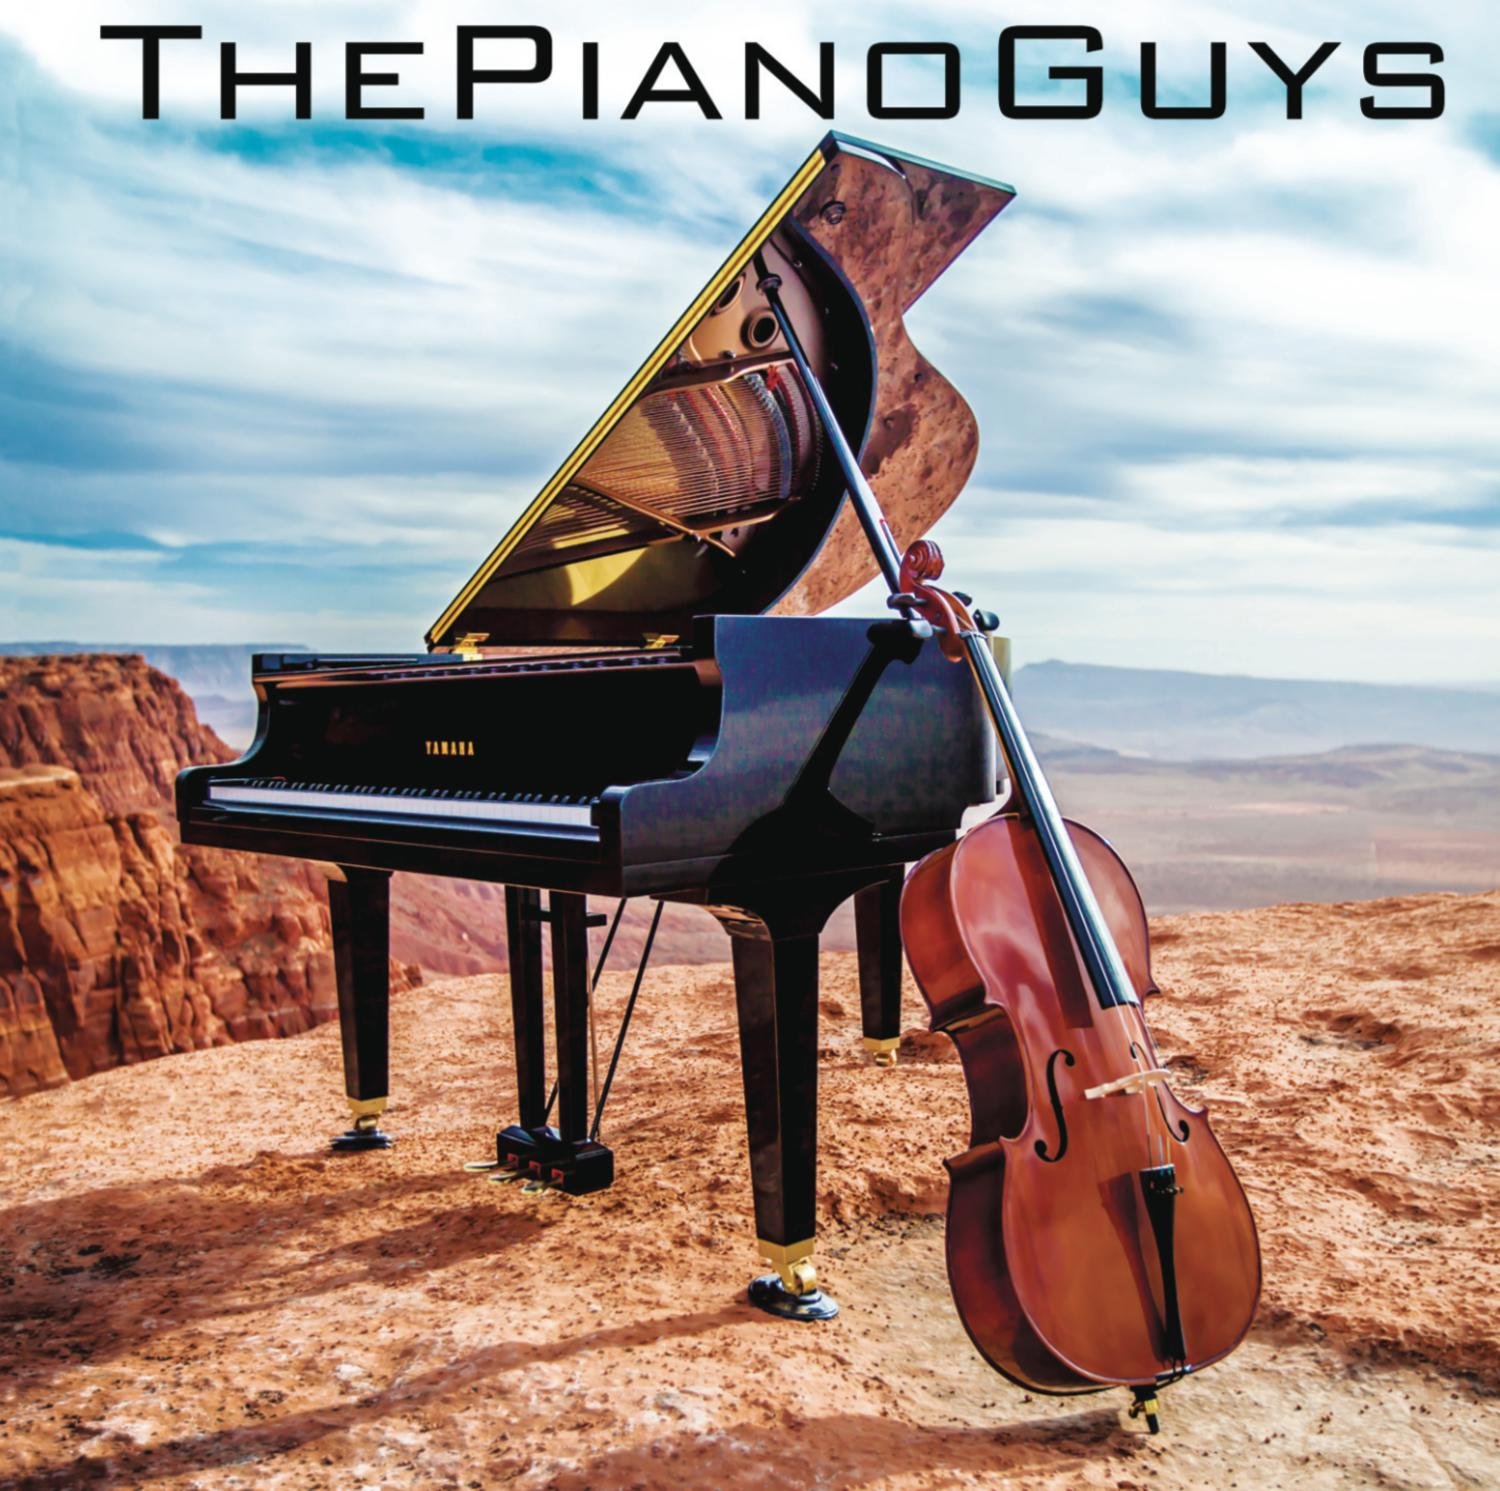 The Piano Guys - The Piano Guys - Đĩa Cd - Hãng Đĩa Thời Đại (Times) – Hãng  Đĩa Thời Đại (Times Records) | Record Label In The Heart Of Saigon